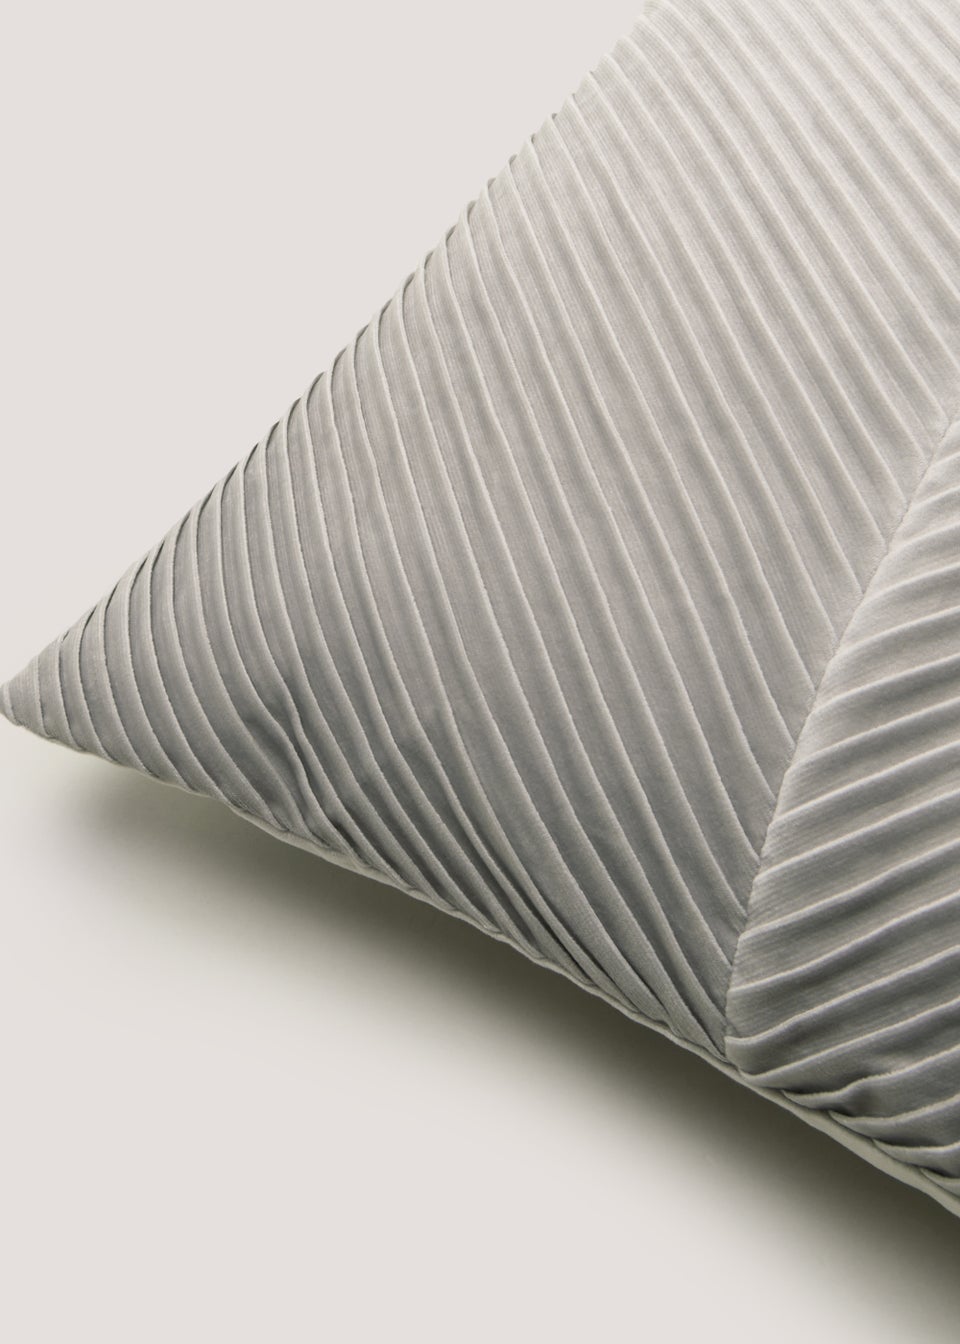 Light Grey Pleated Velvet Cushion (50cm x 50cm)